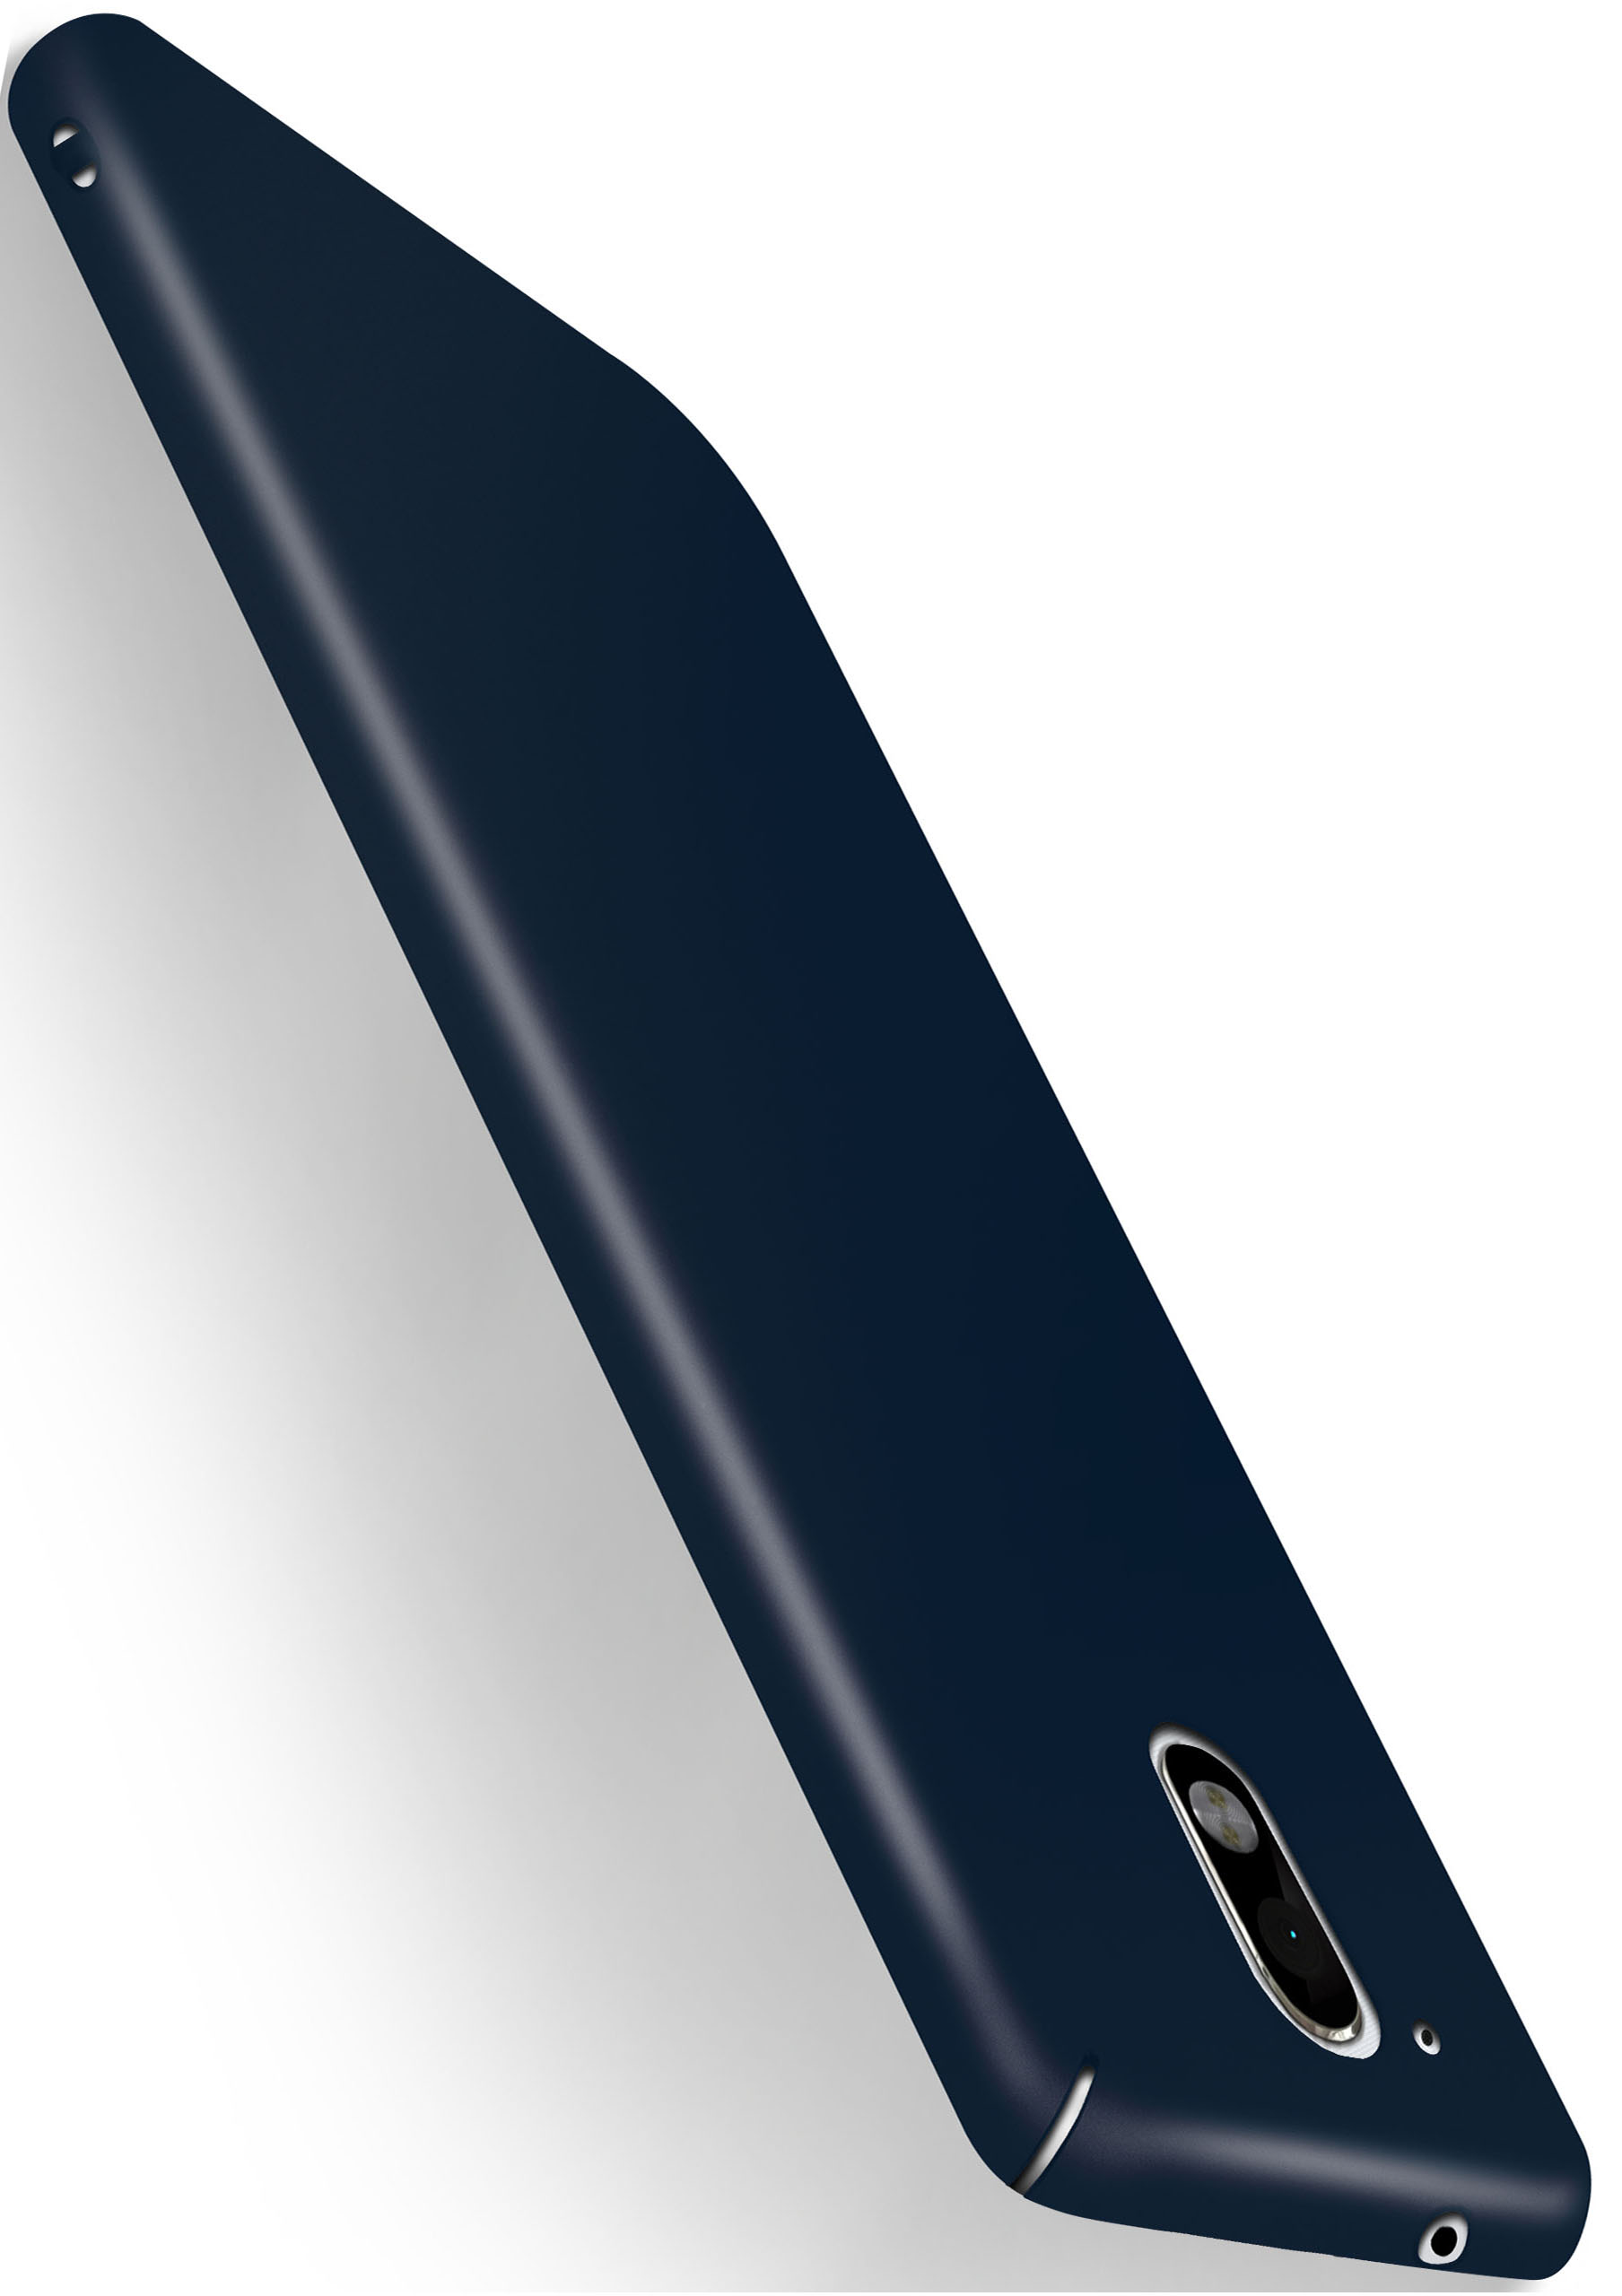 MOEX Alpha Case, Backcover, Lenovo, / Blau Plus, Moto G4 G4